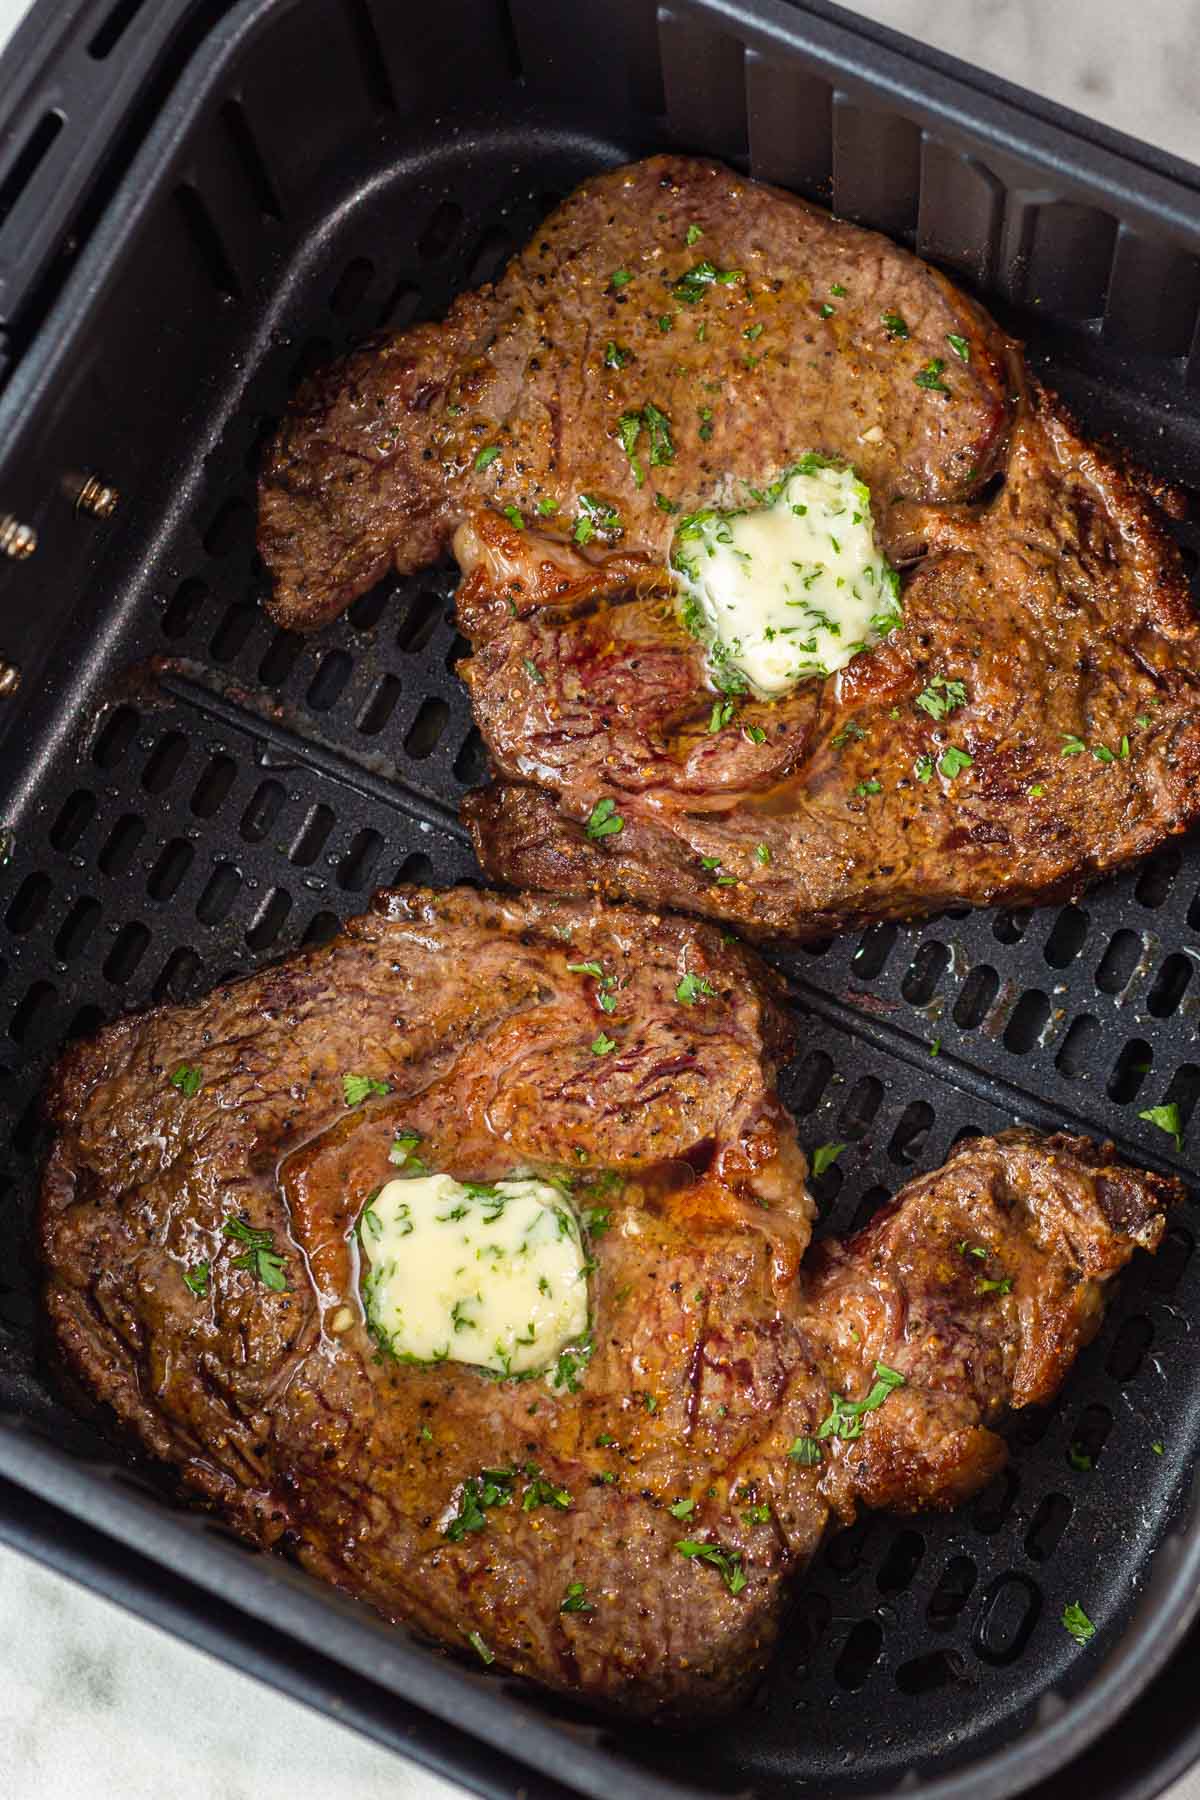 rib eye steak with garlic herb butter in the air fryer.